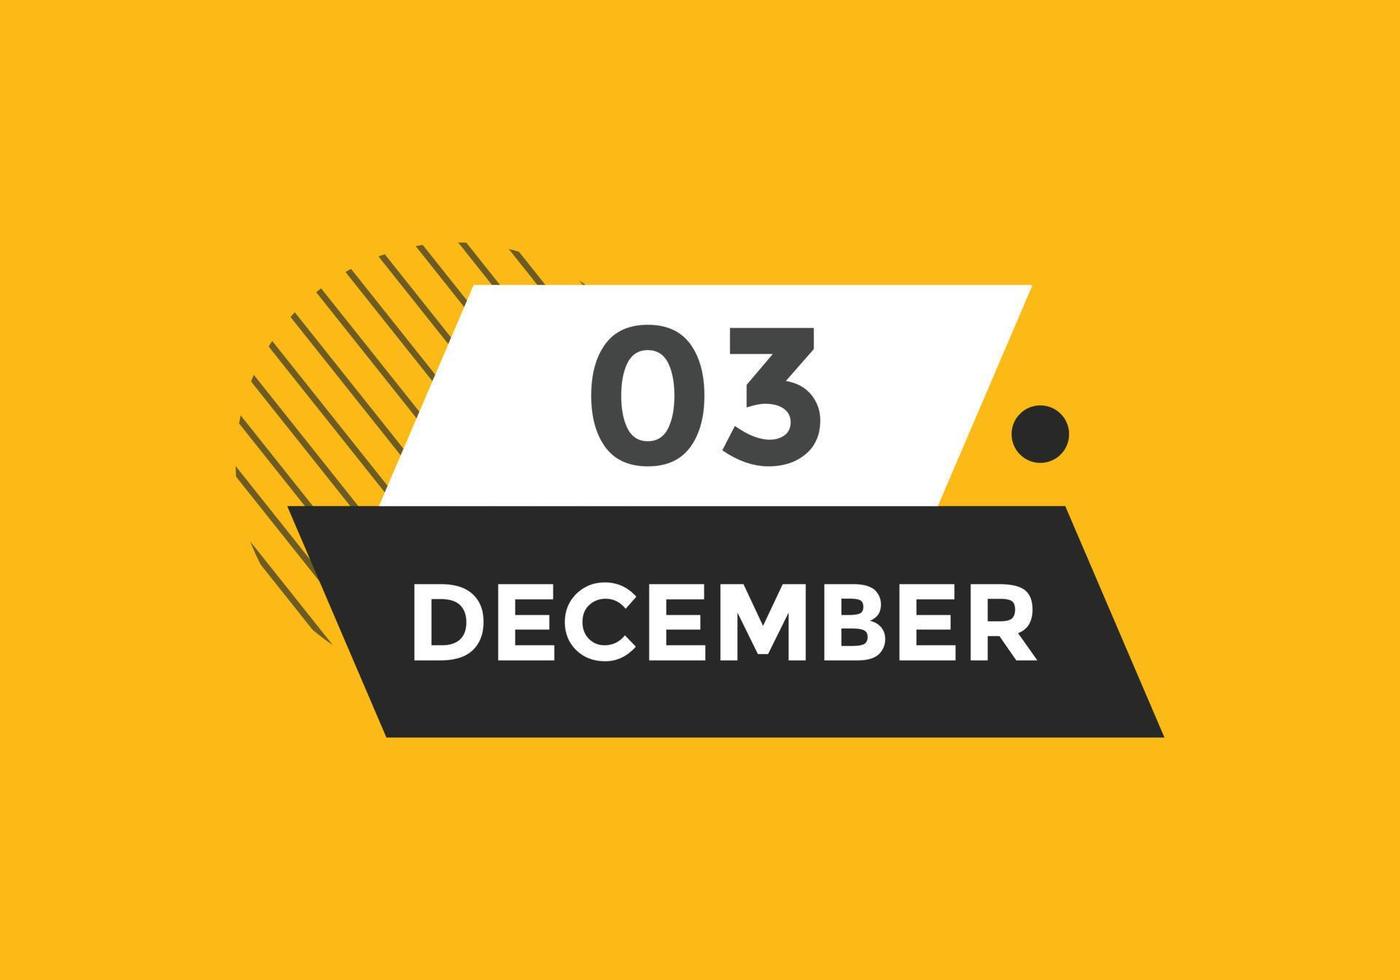 december 3 calendar reminder. 3rd december daily calendar icon template. Calendar 3rd december icon Design template. Vector illustration